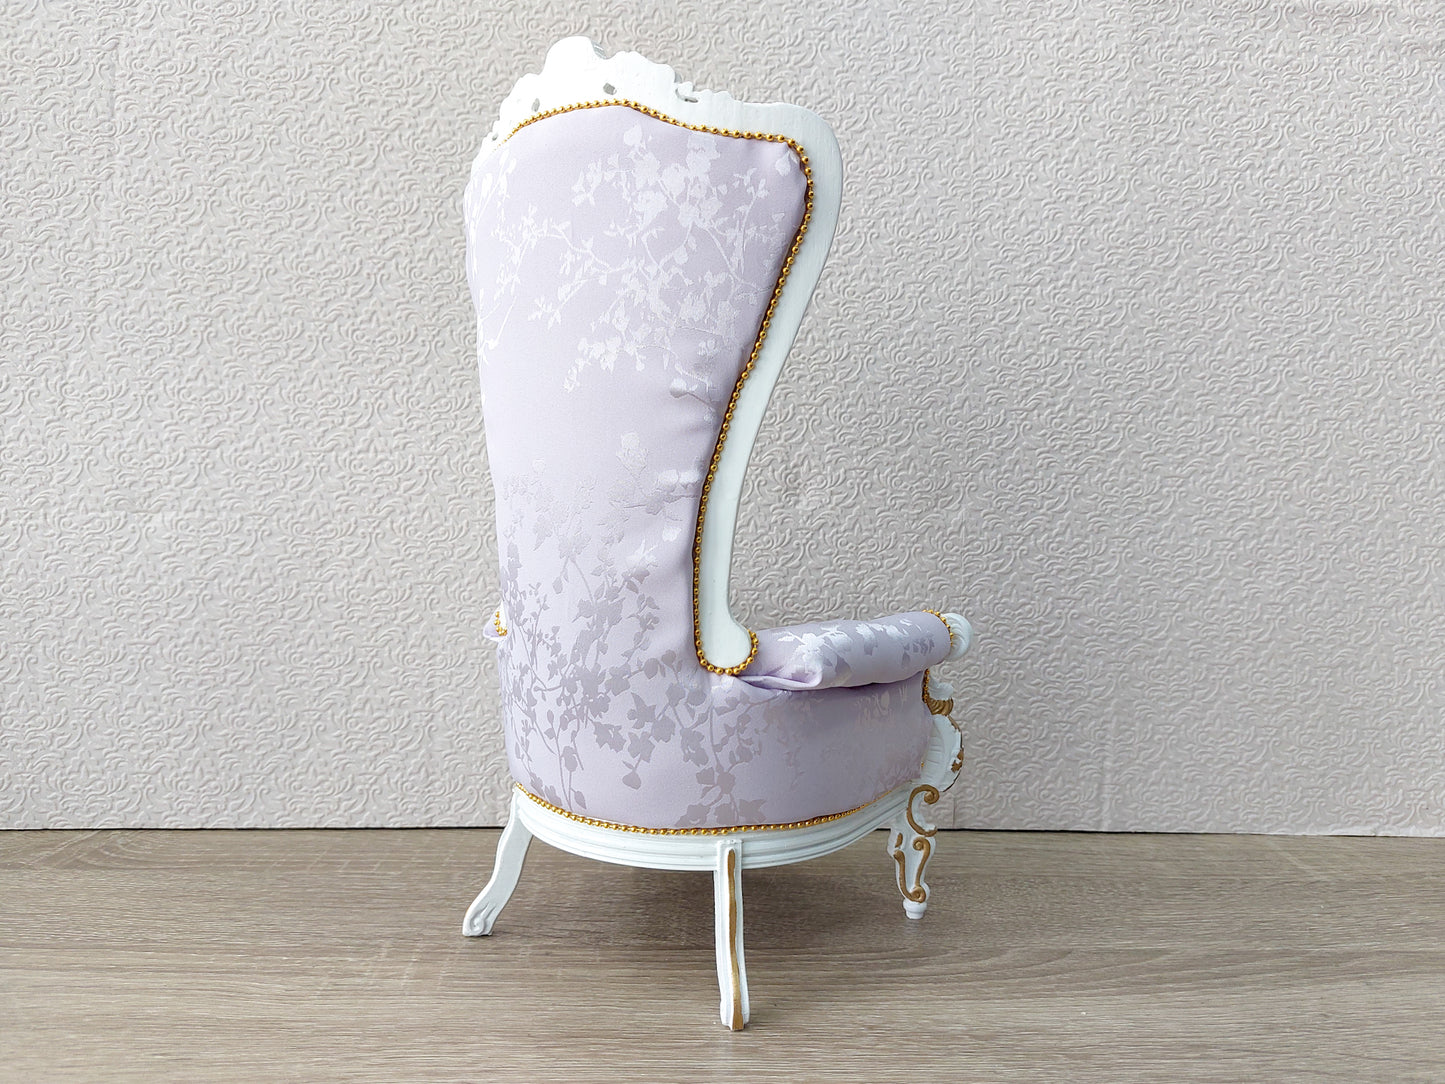 Baroque throne for dolls, white & purple